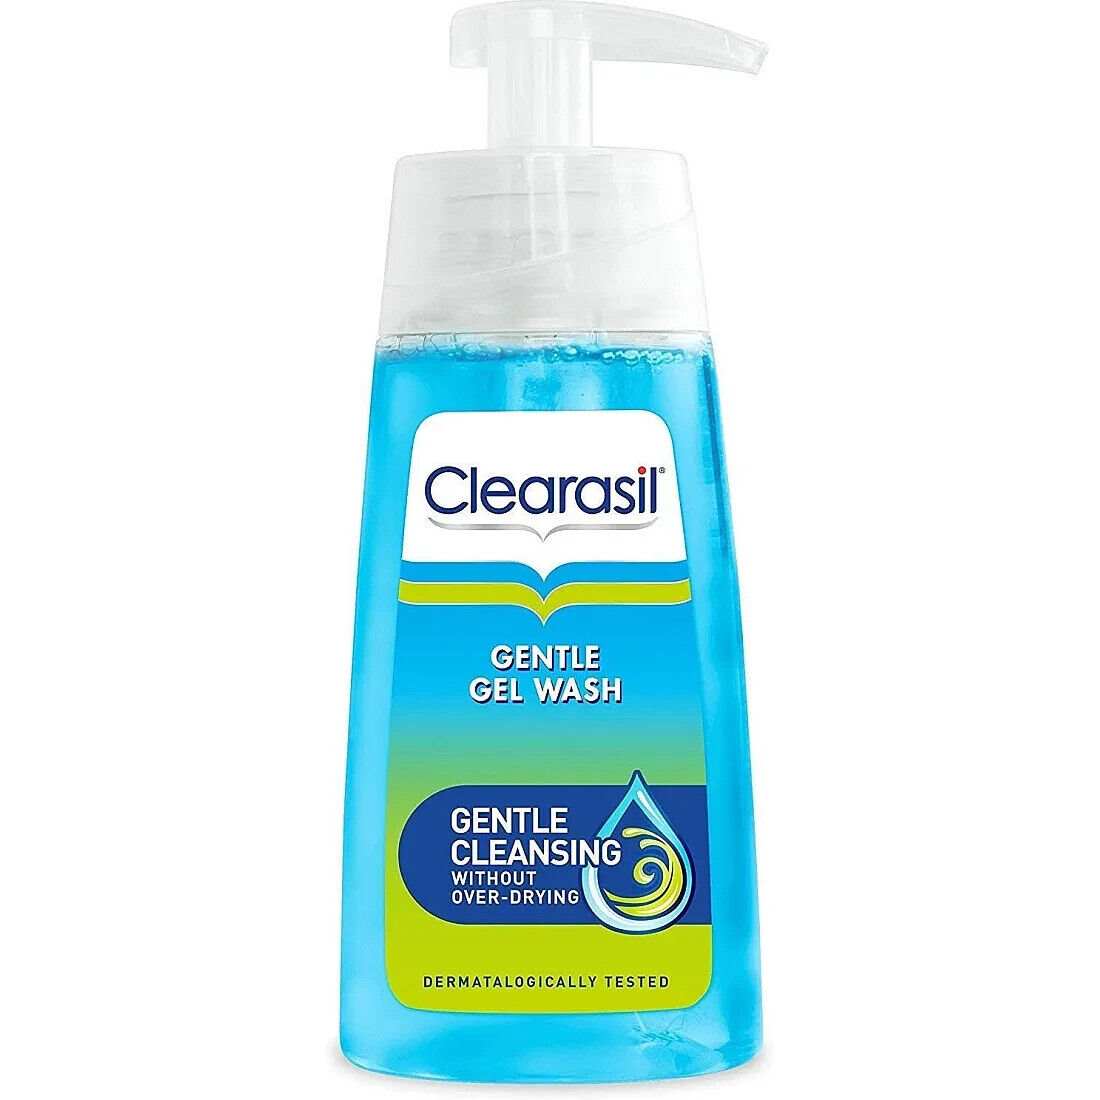 Clearasil Gentle Gel Wash - Dollars and Sense